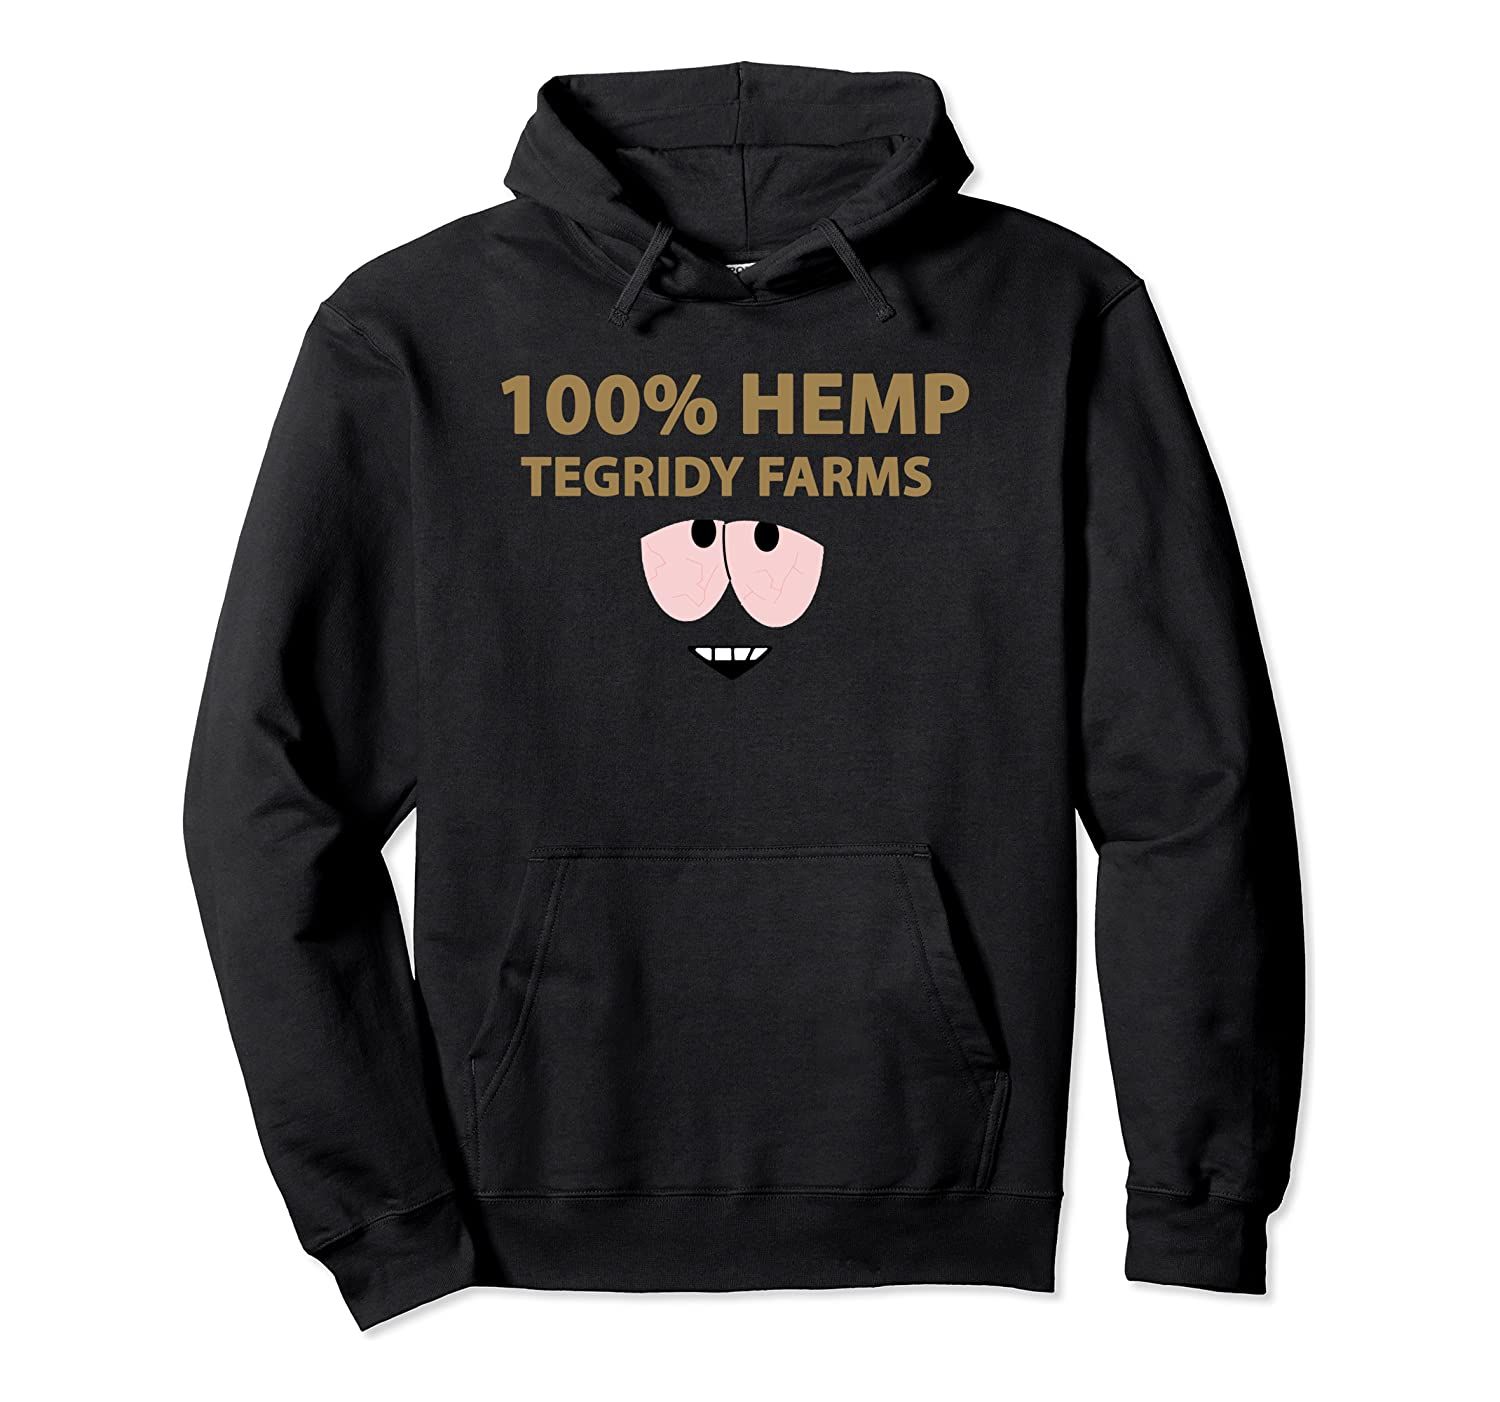 100% HEMP Tegridy Farms Pullover Hoodie, T-Shirt, Sweatshirt